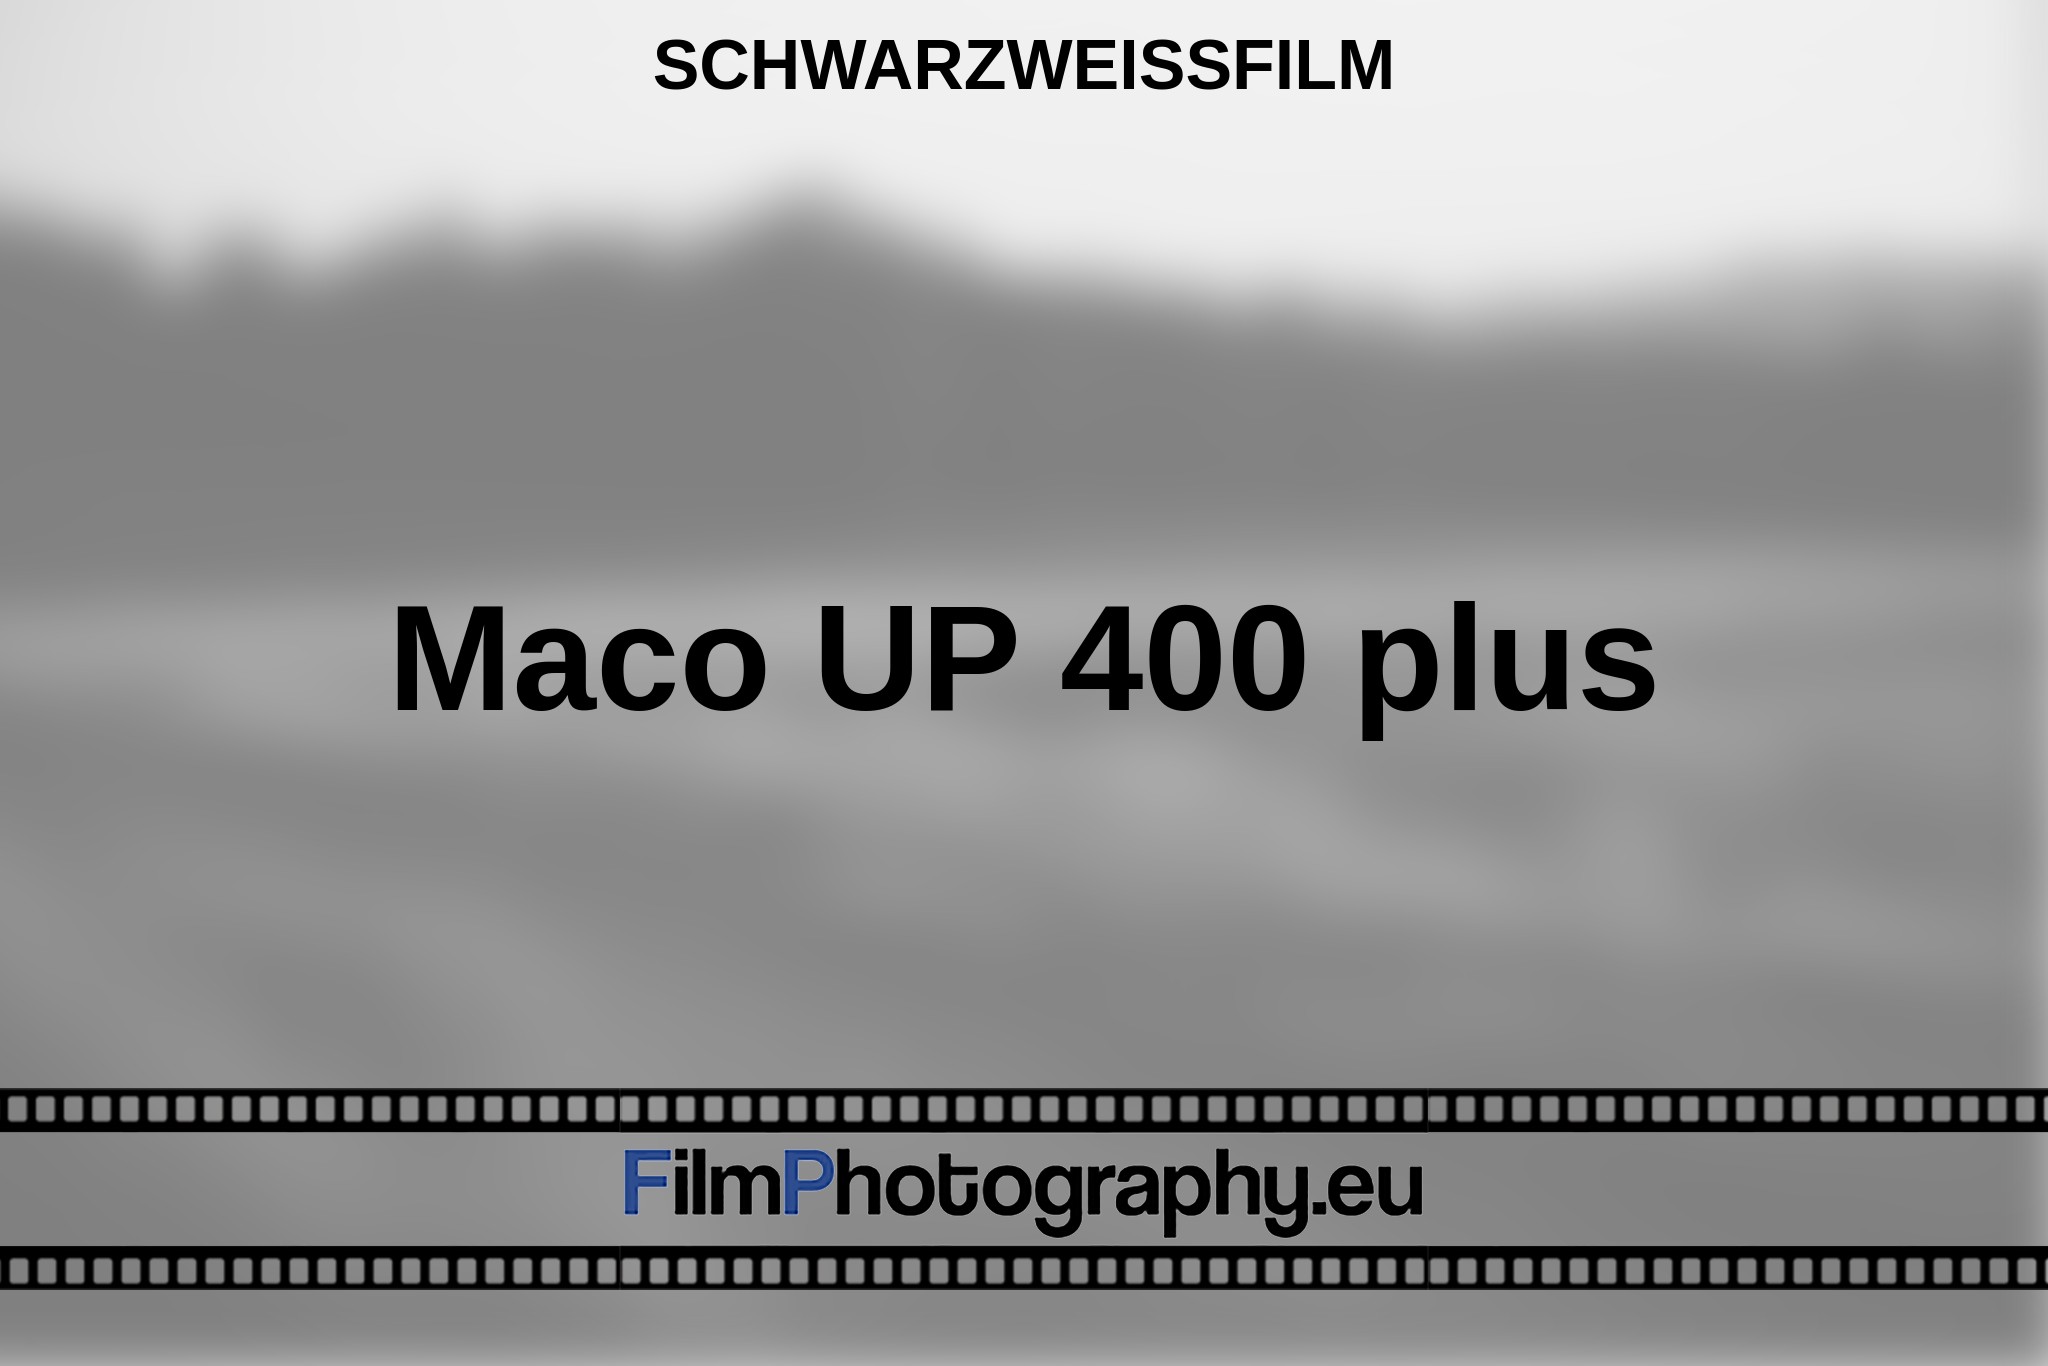 maco-up-400-plus-schwarzweißfilm-bnv.jpg